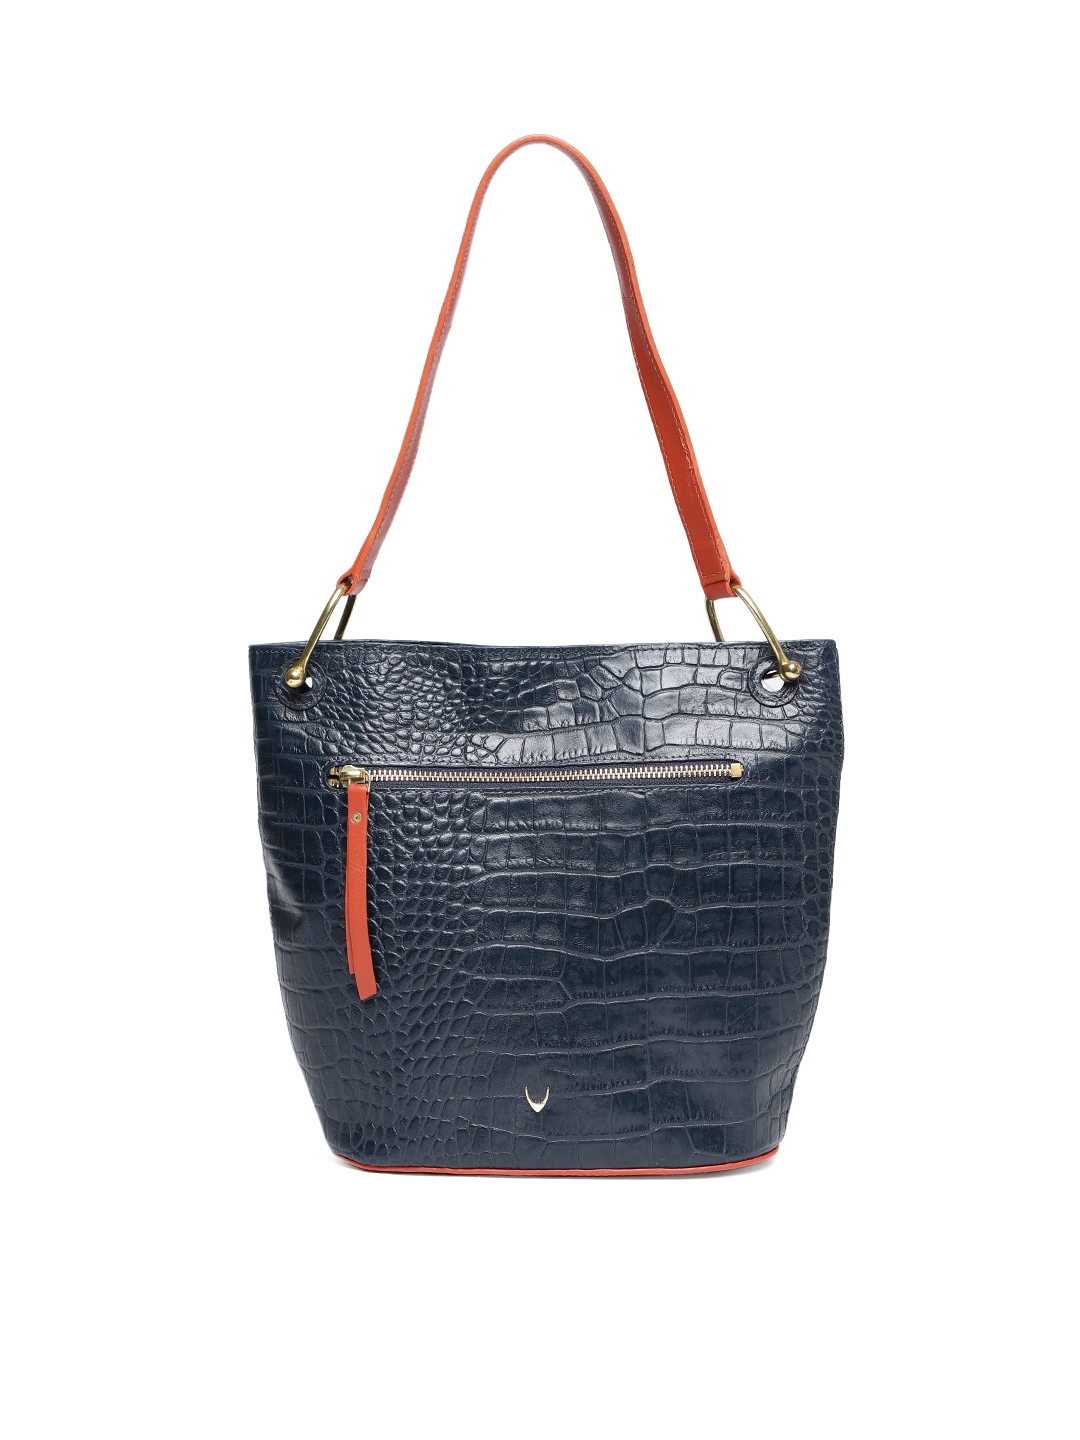 Buy Hidesign Shoulder Bag - Handbags for Women 8324475 | Myntra